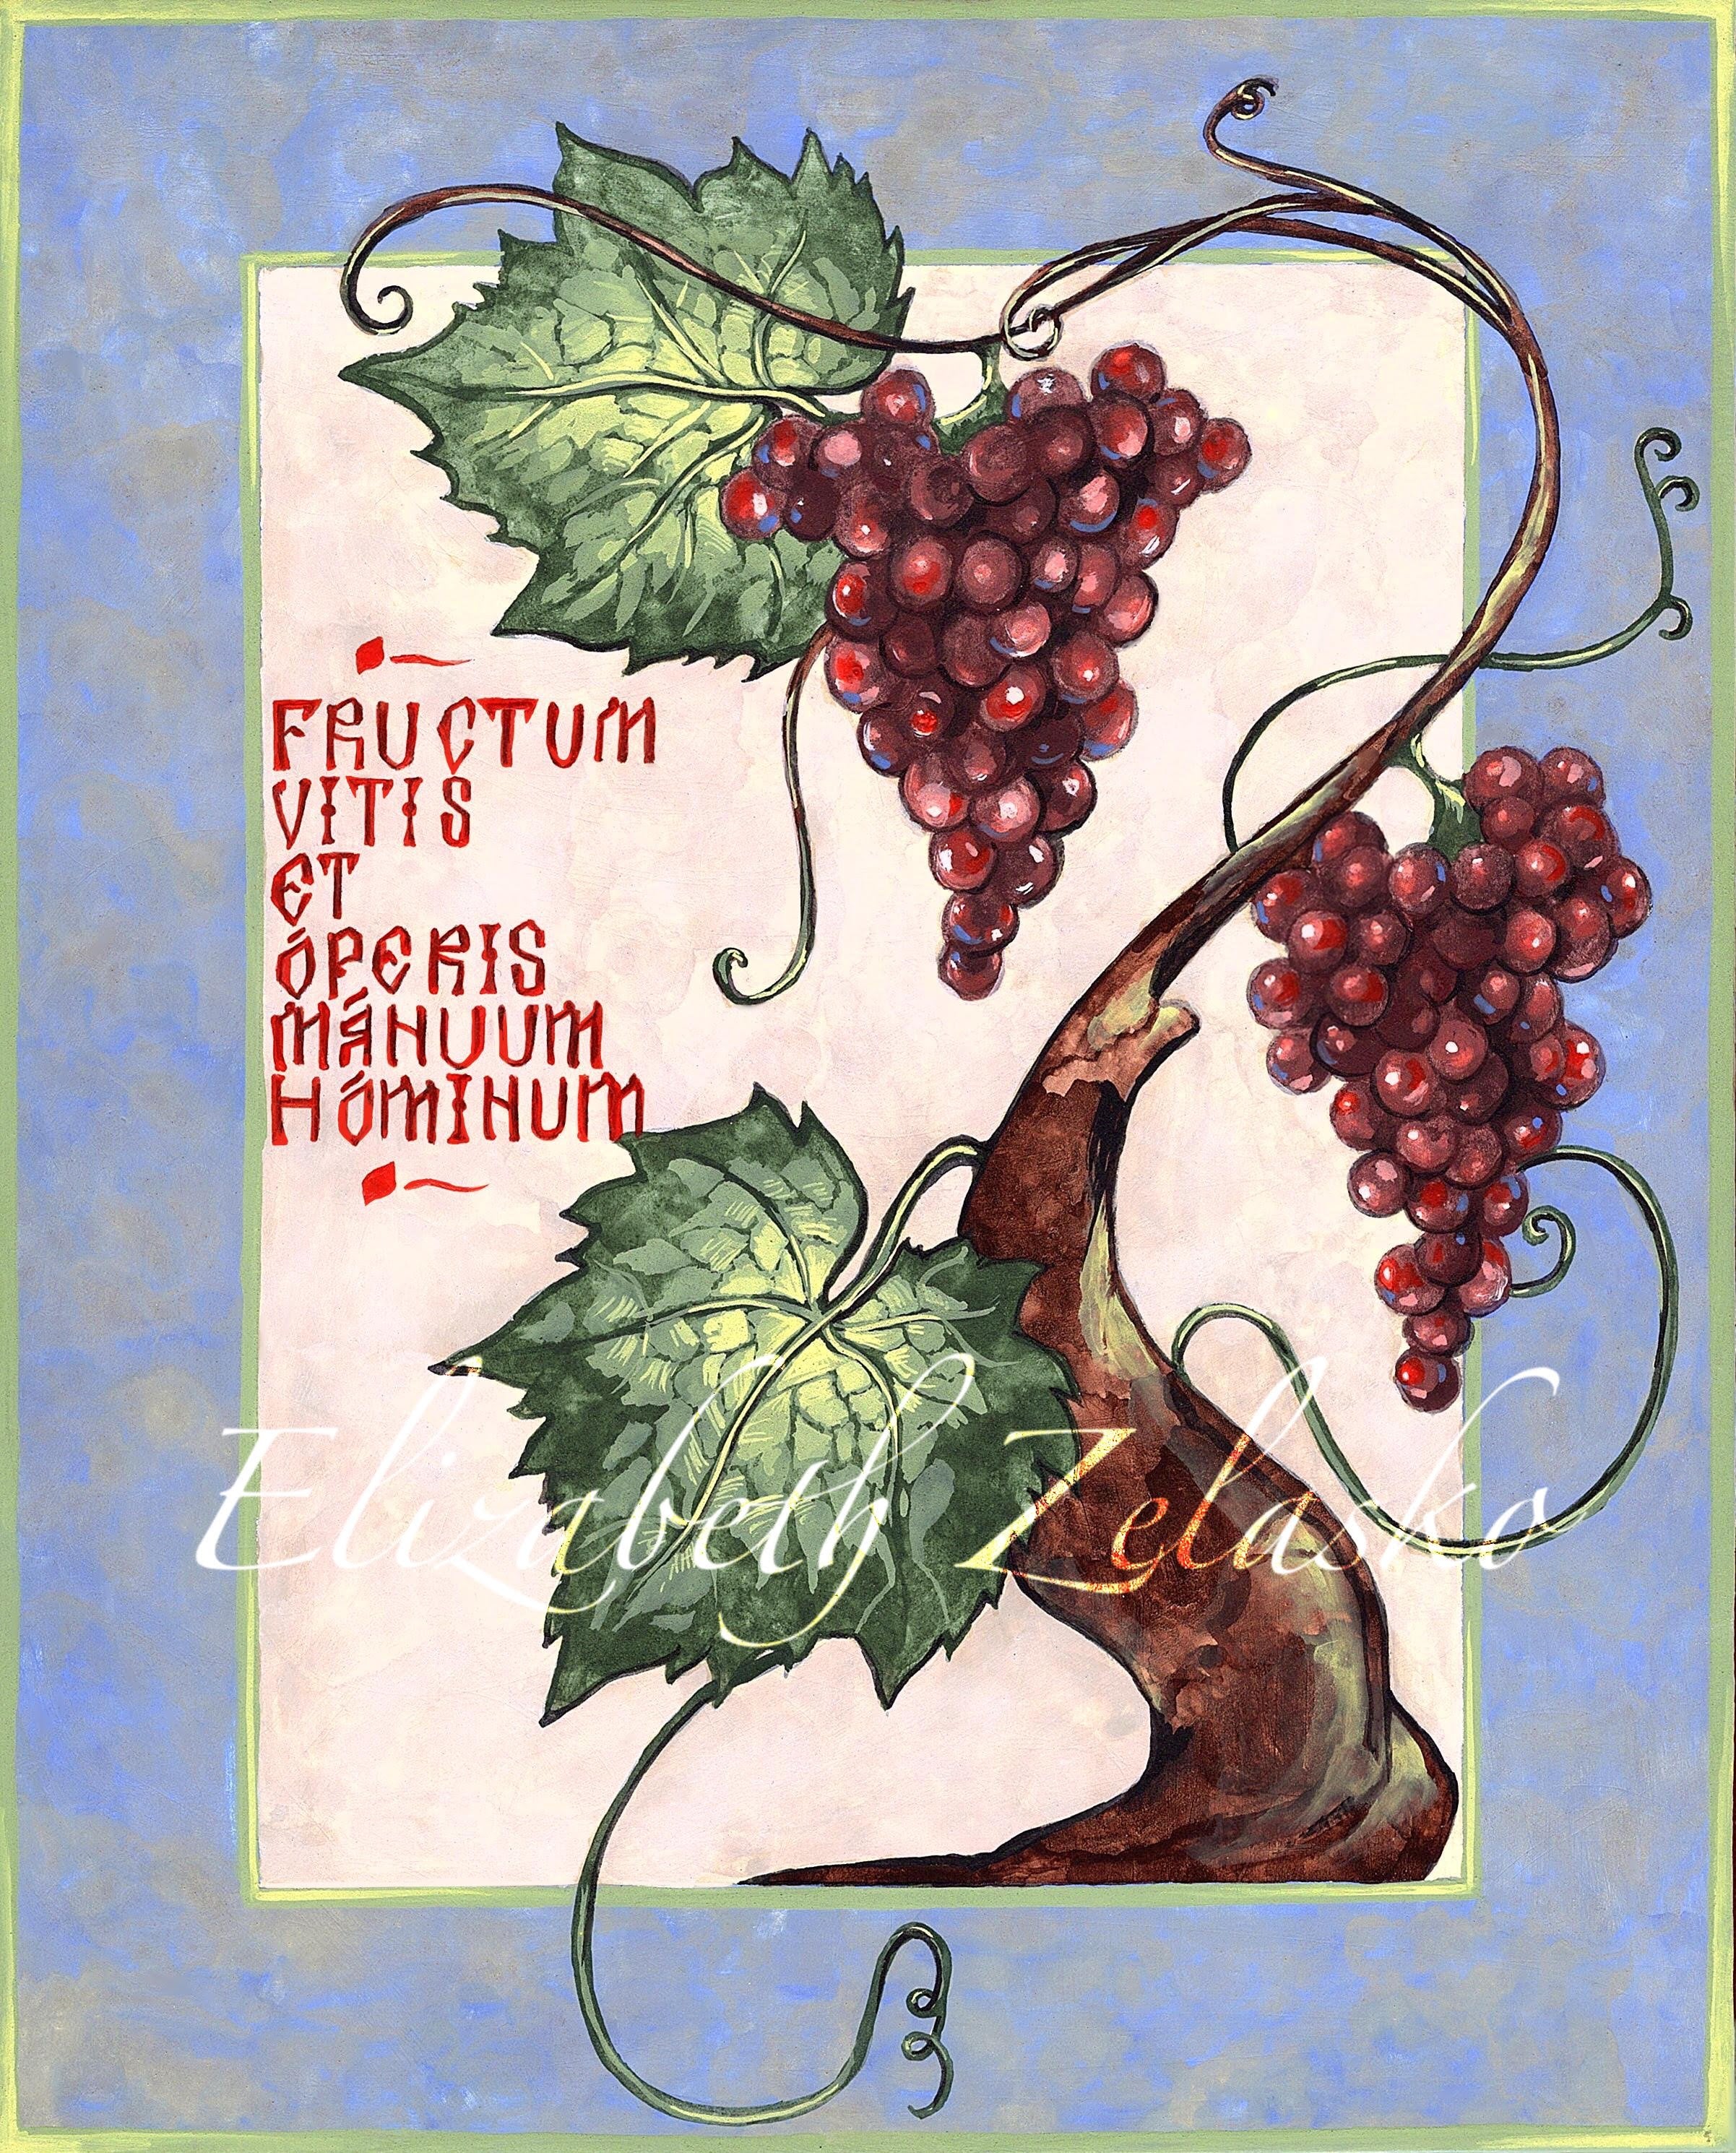 Fruit of the Vine, Work of Human Hands